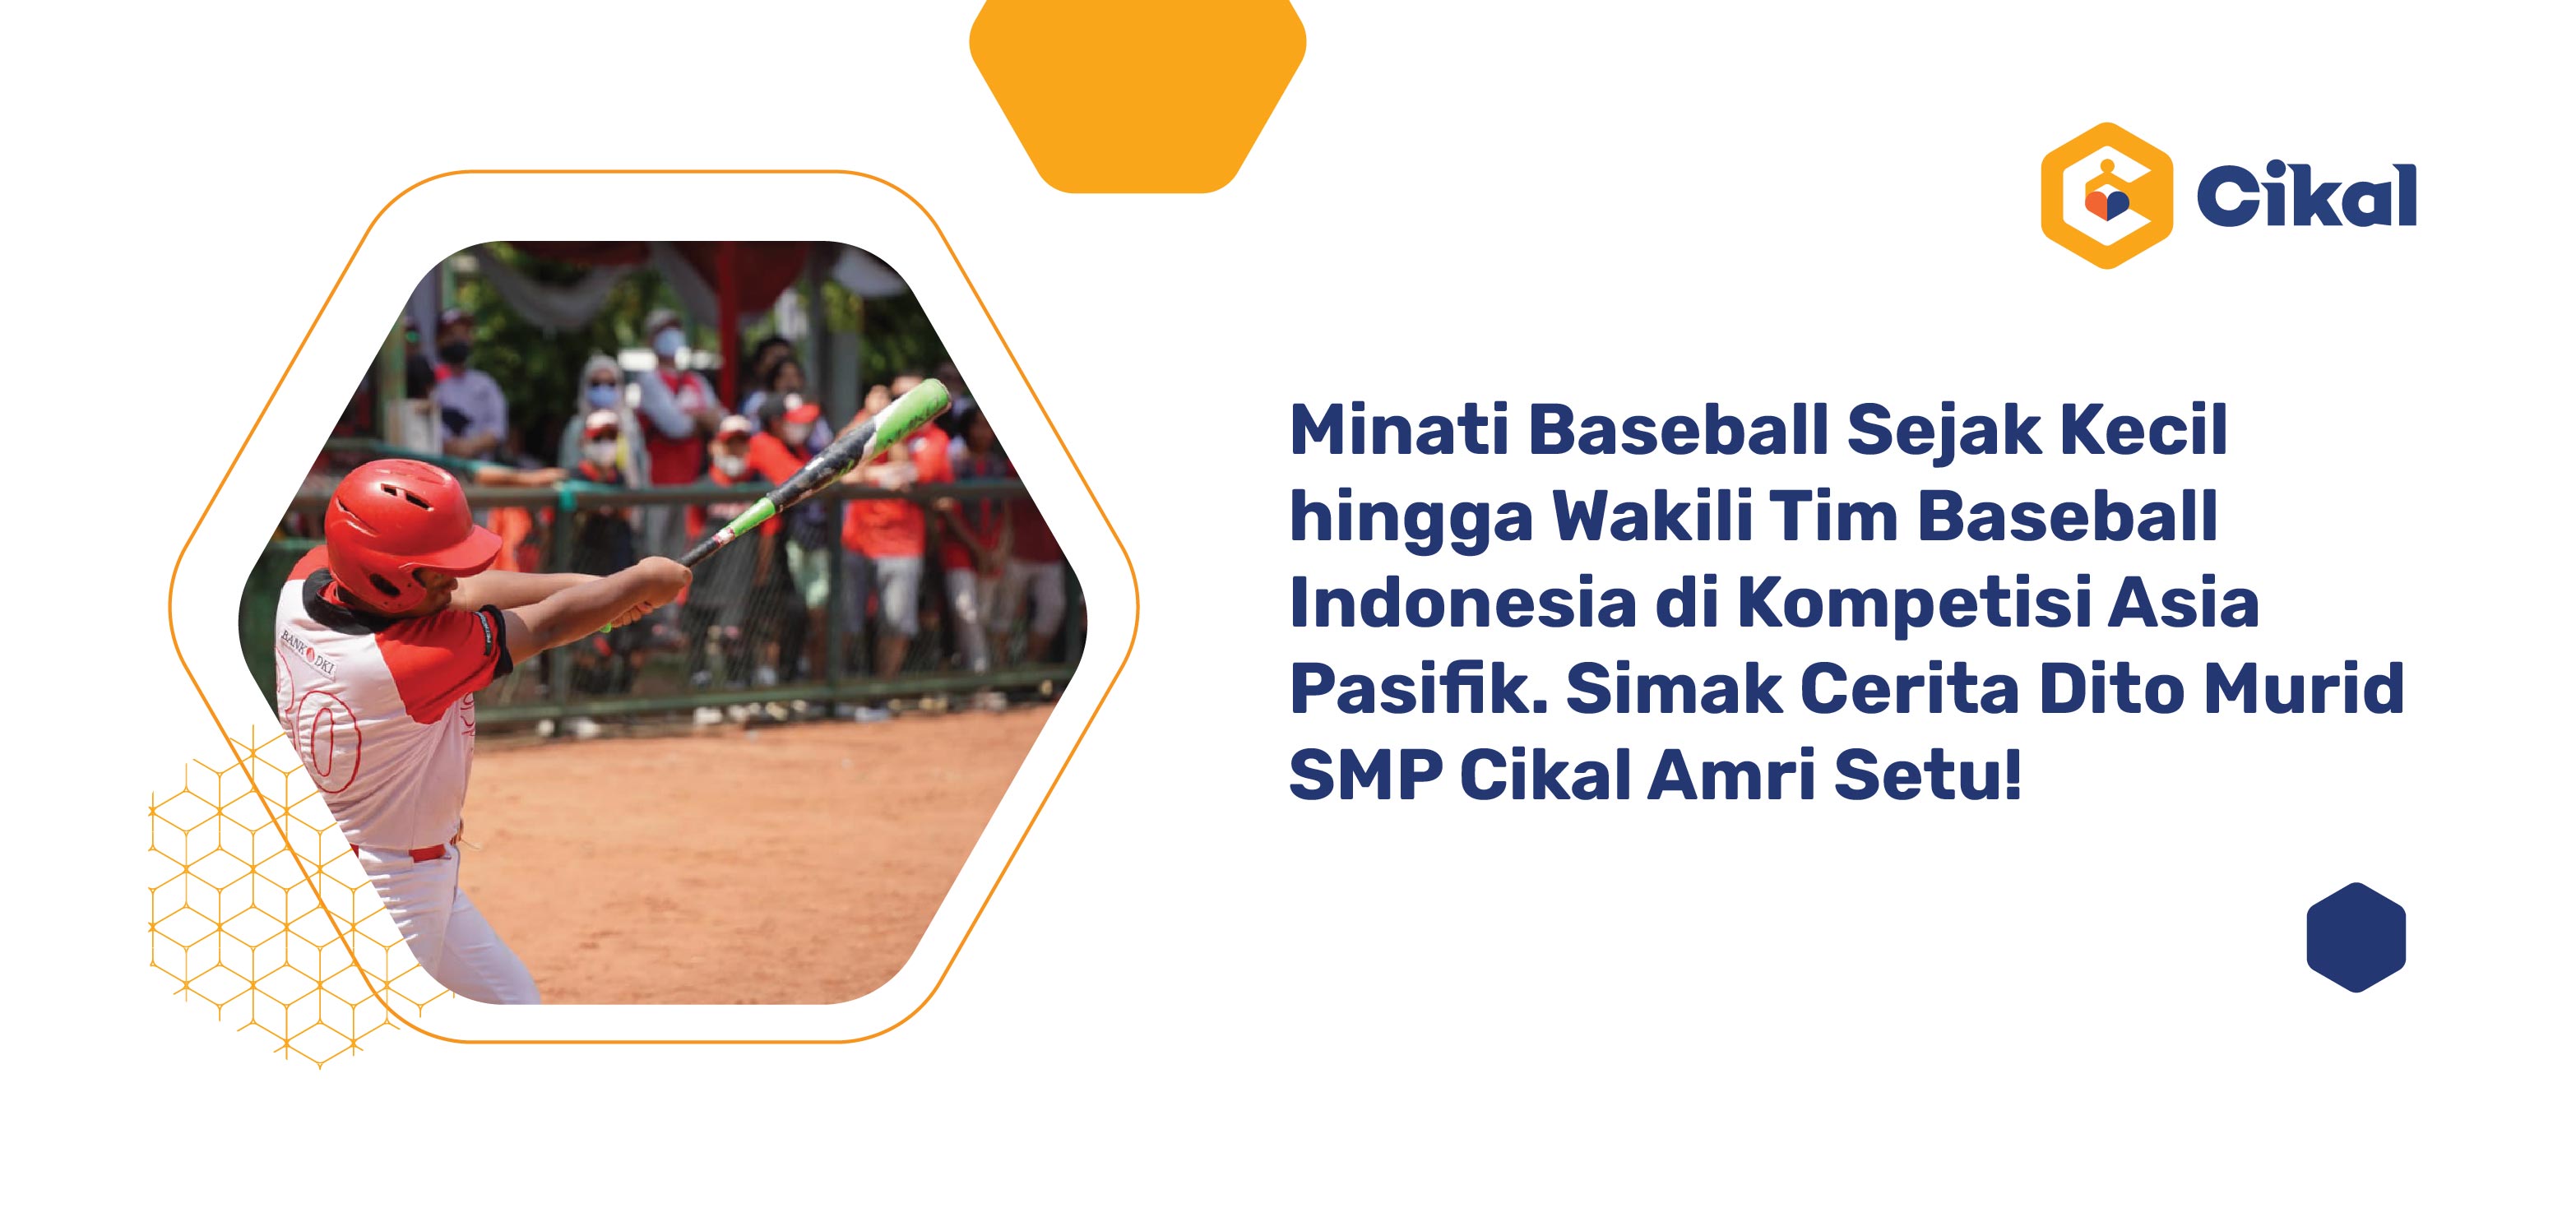 Minati Baseball Sejak Kecil hingga Wakili Tim Baseball Indonesia di Kompetisi Asia Pasifik. Simak Cerita Dito Murid SMP Cikal Amri Setu